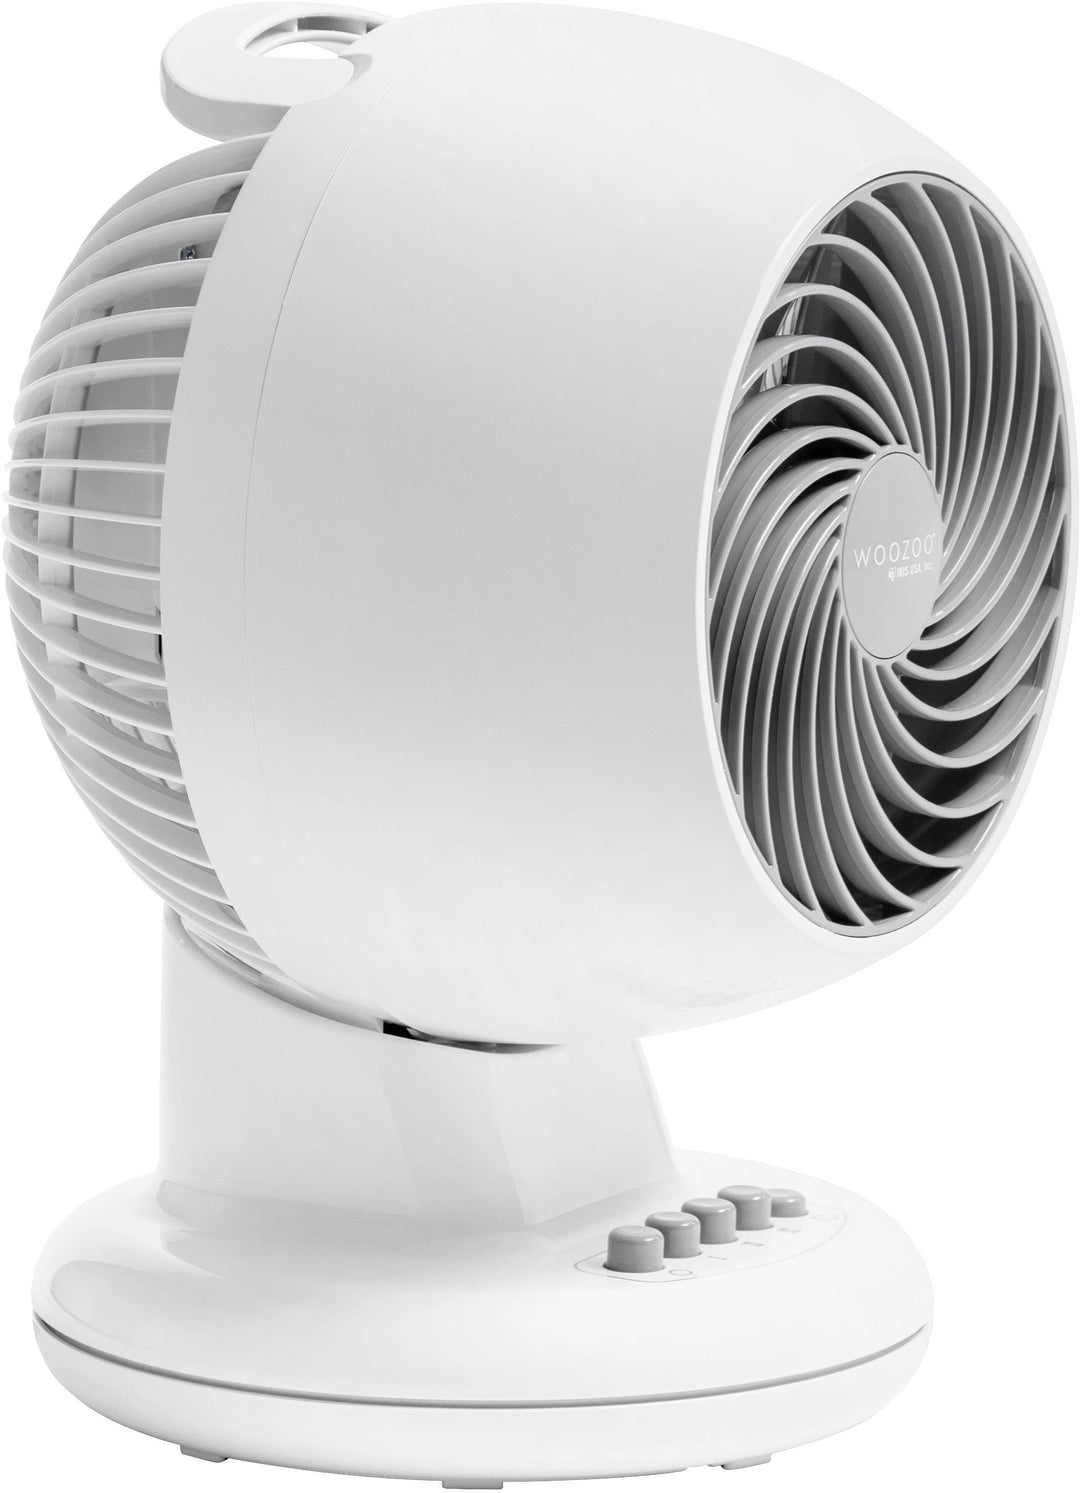 Woozoo - Compact Personal Oscillating Fan - White_2